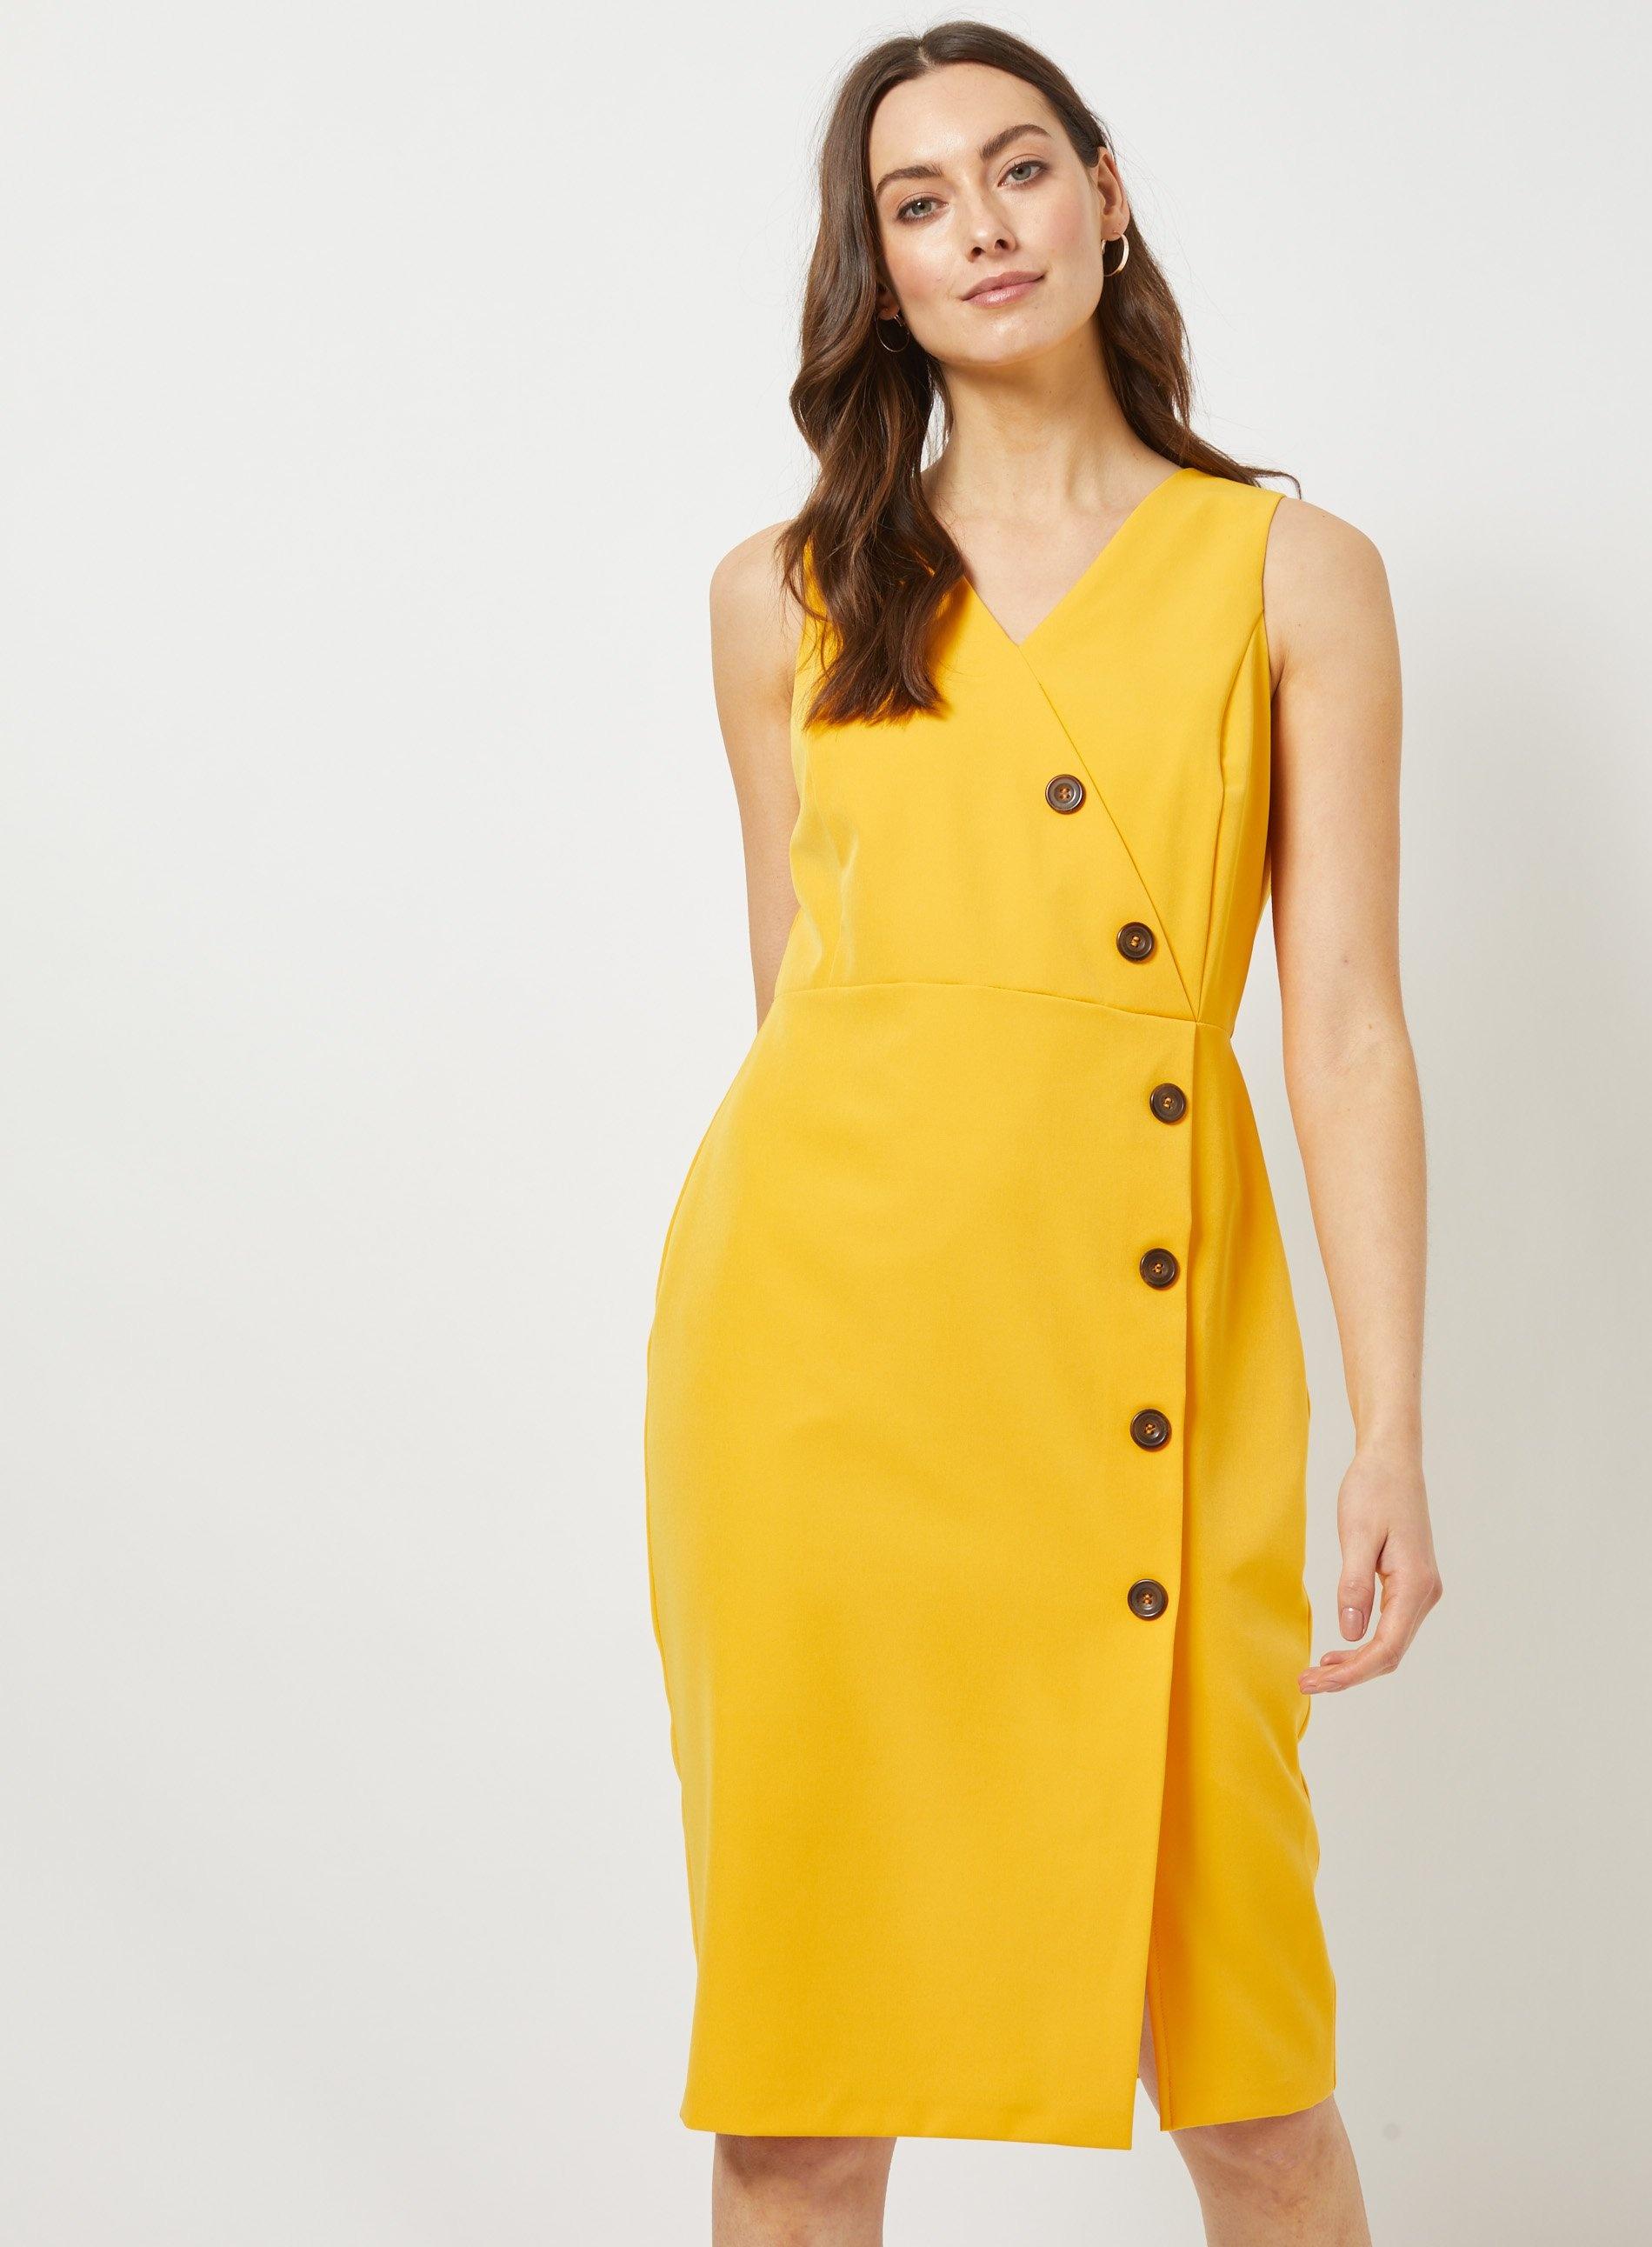 dorothy perkins yellow dress